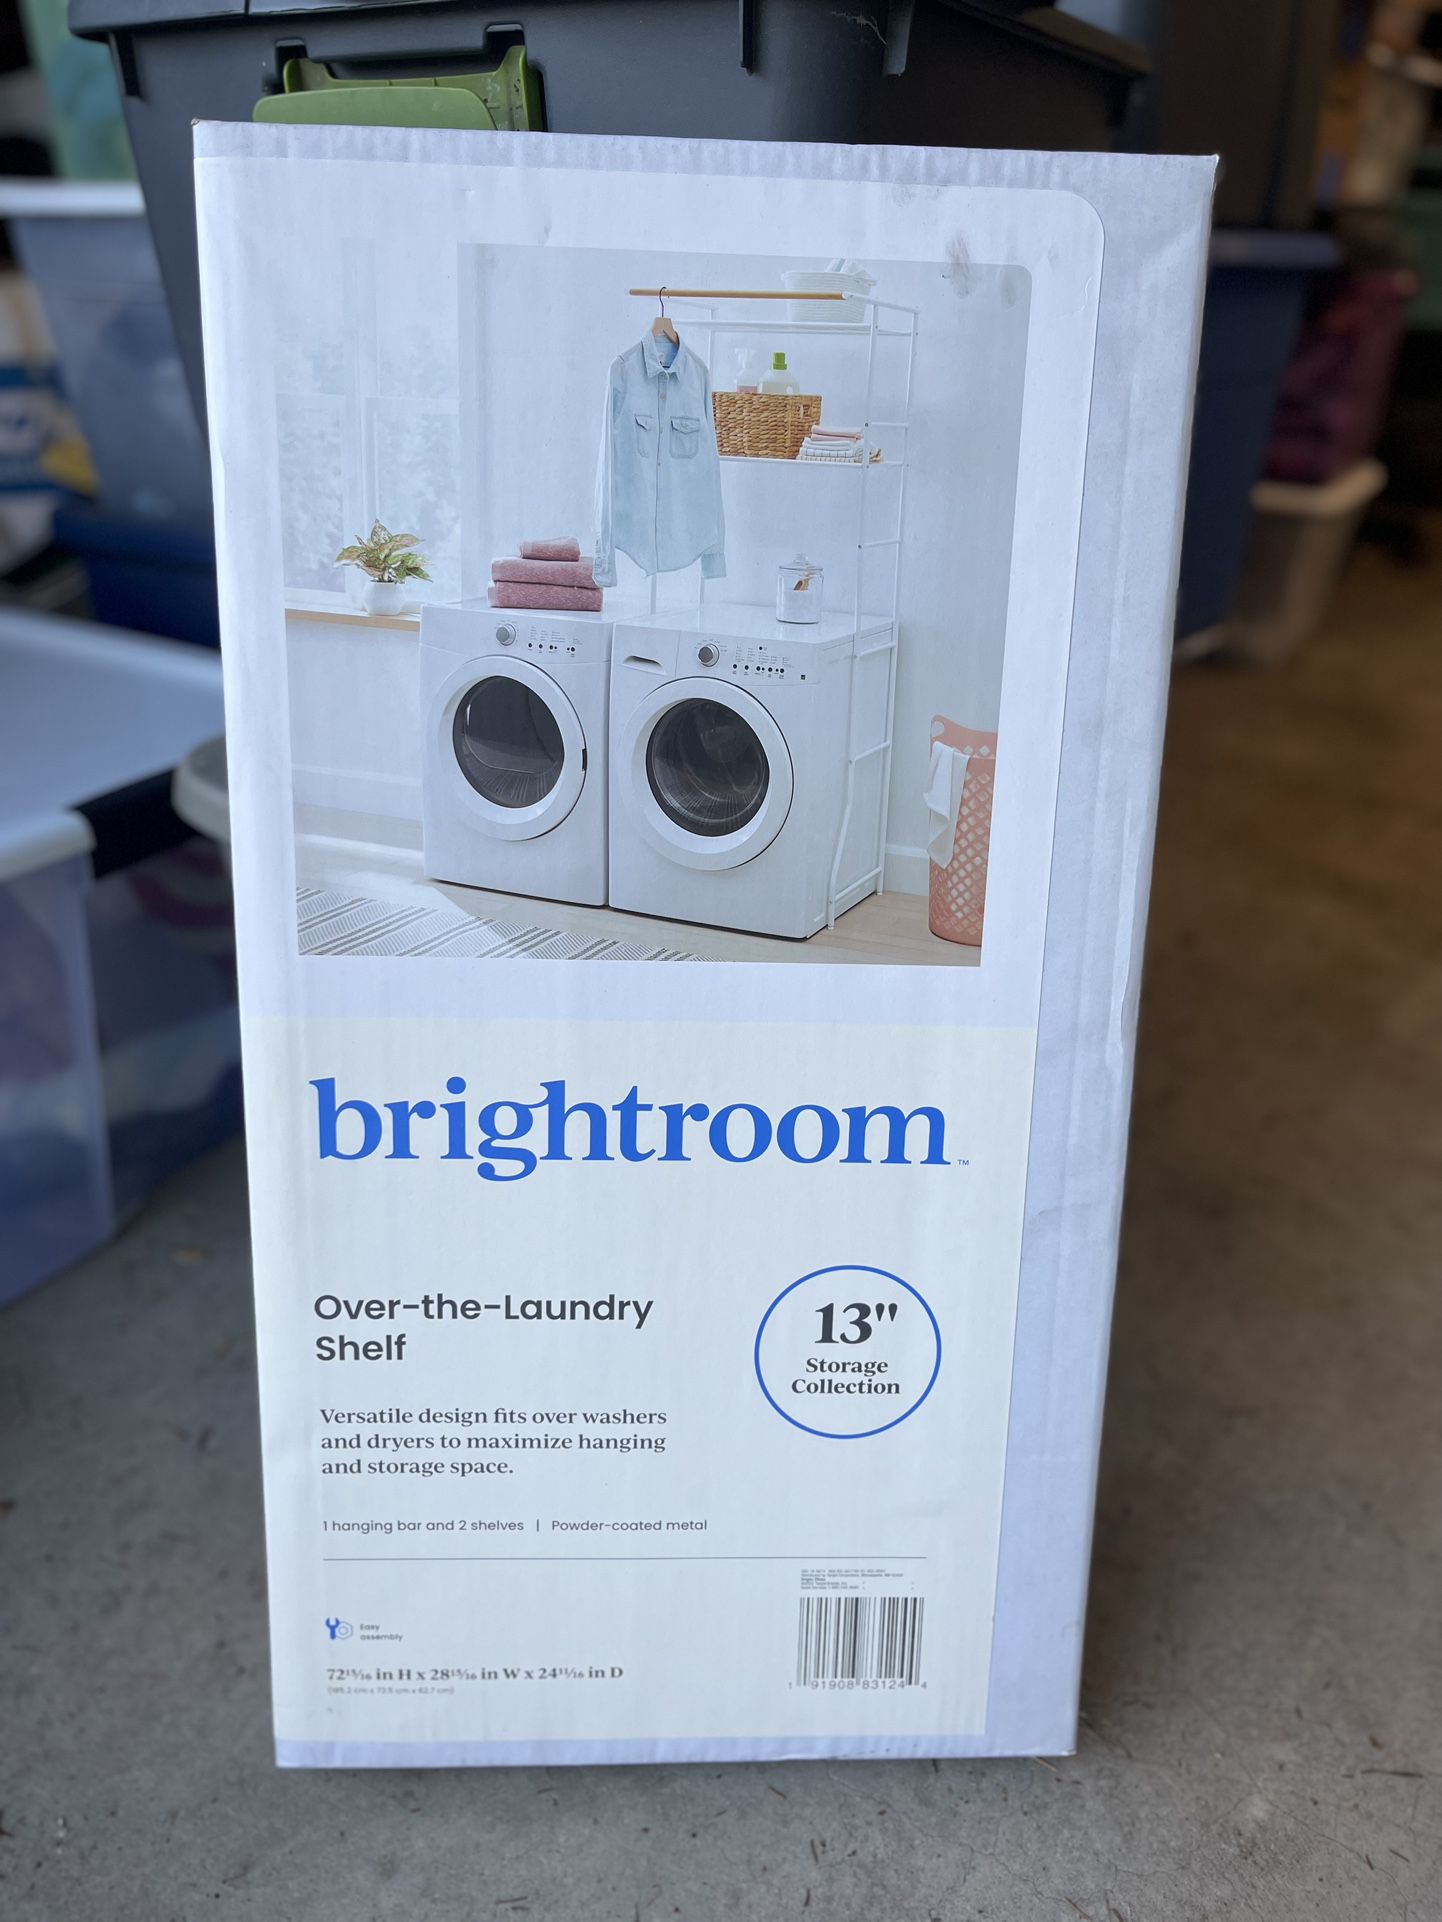 NIB Bright room Over-the-laundry Shelf